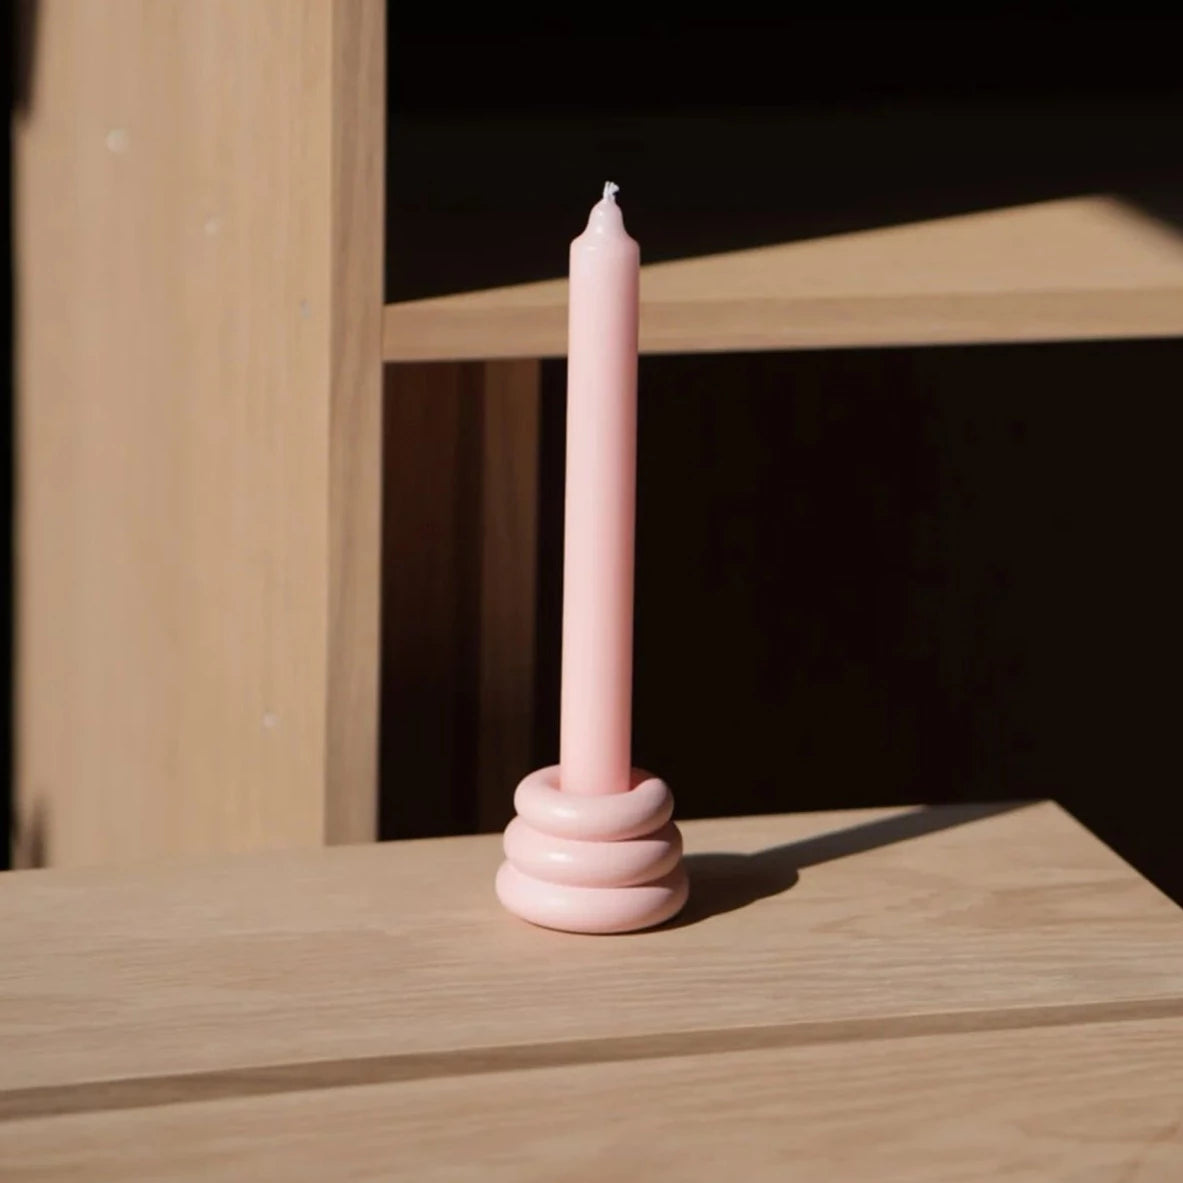 Triple O Candleholder - Baby Pink